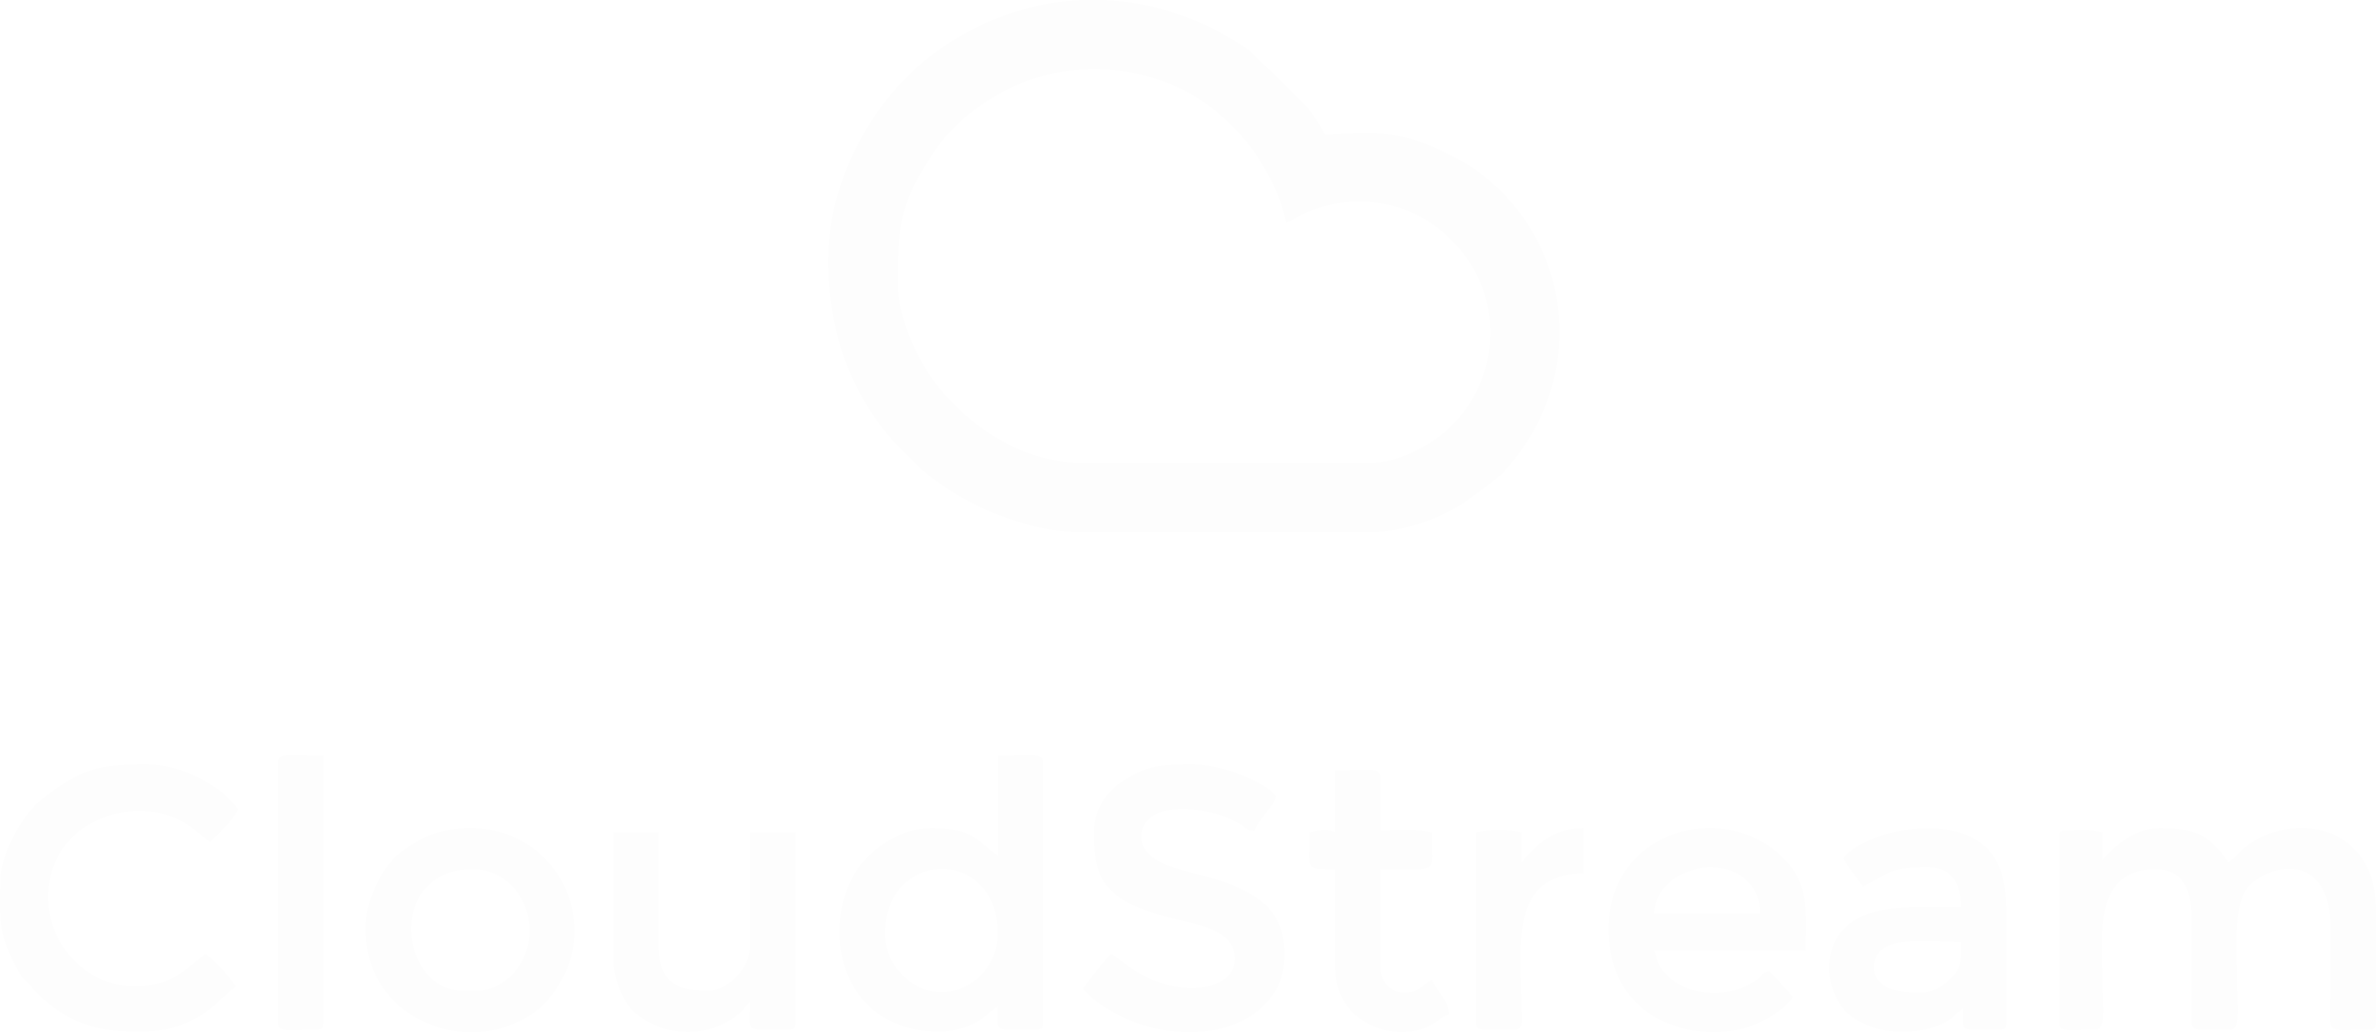 CloudStream